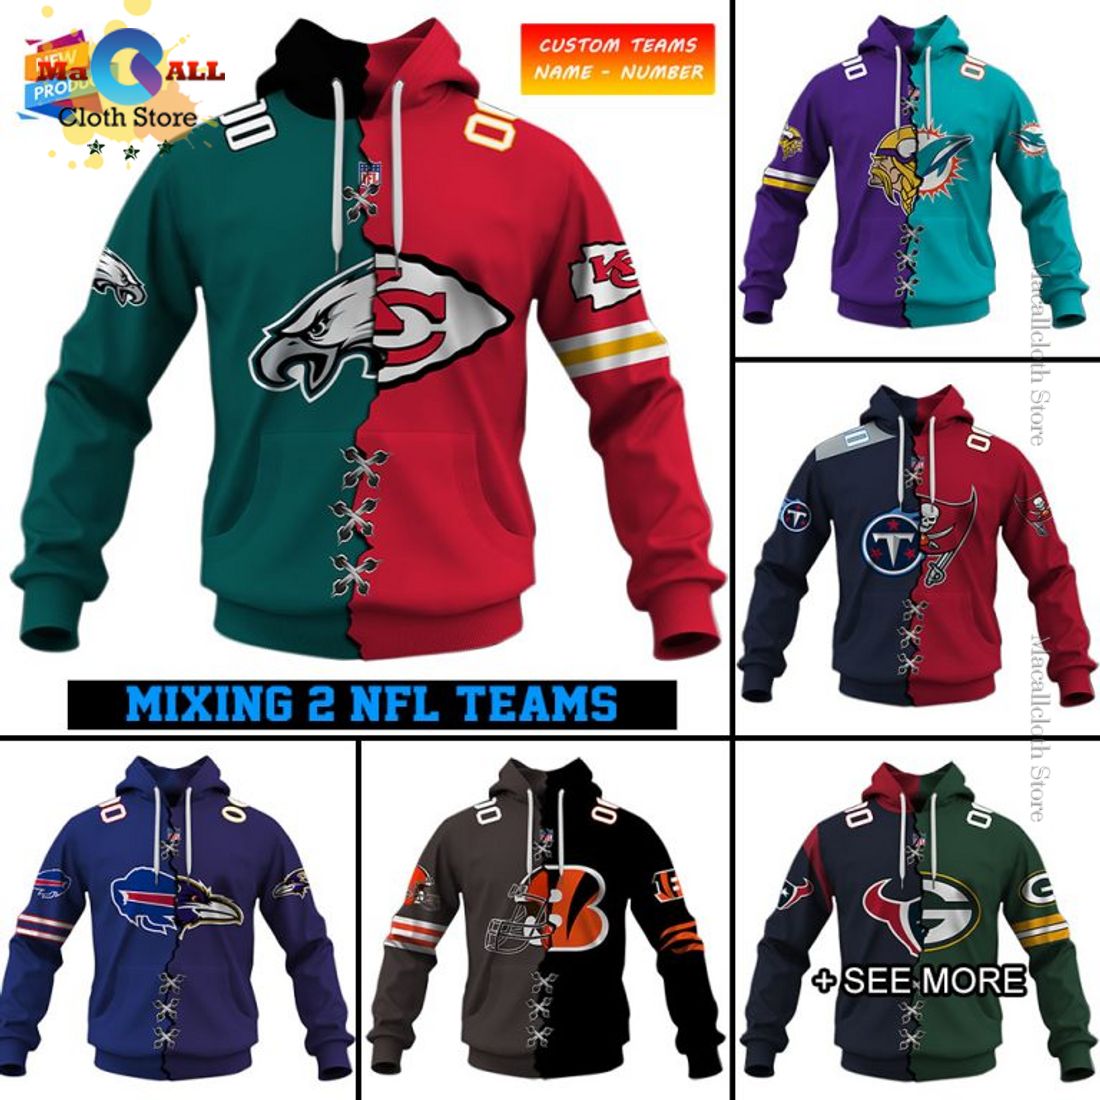 Mix 2 NFL Teams - Macall Cloth Store - Destination for fashionistas